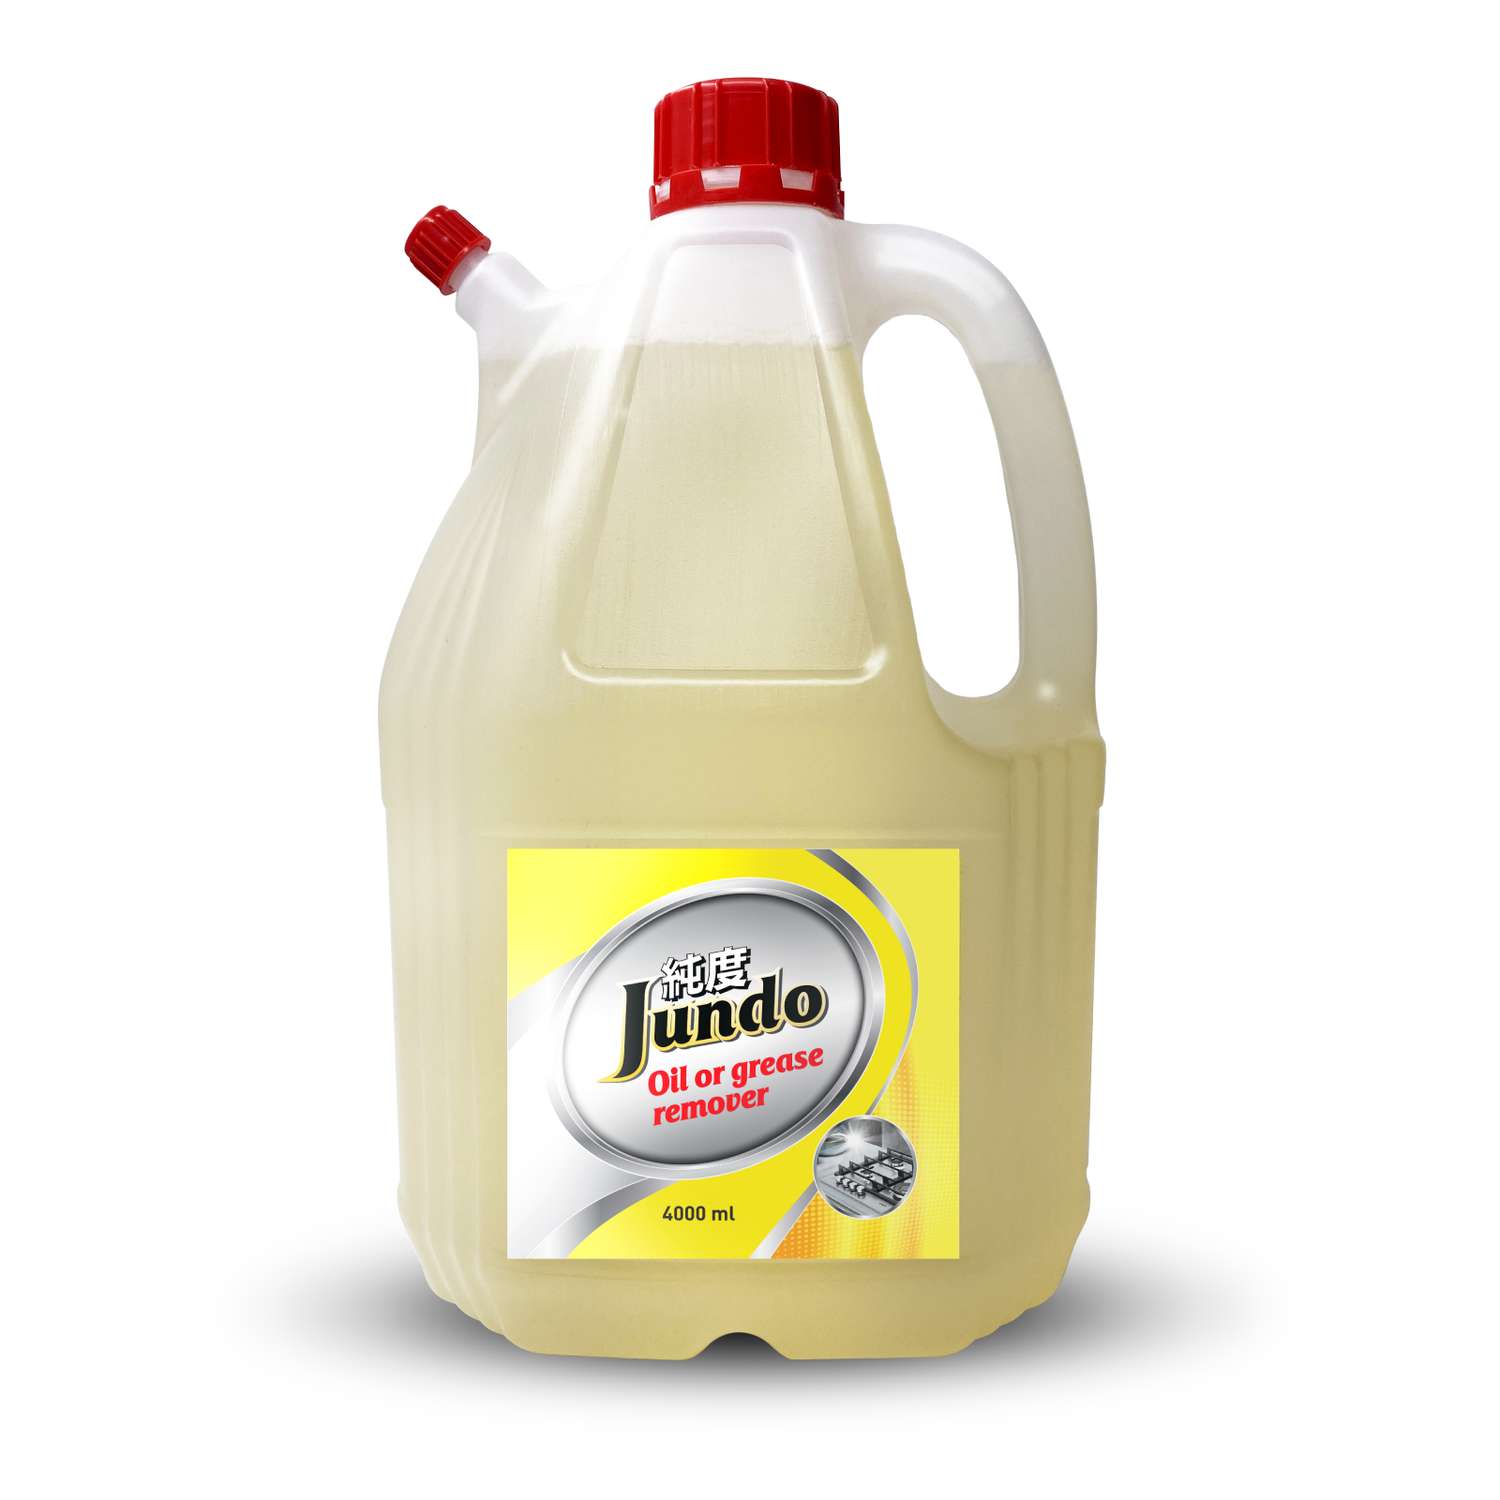 Чистящее средство для кухни Jundo Oil of grease remover 4 л антижир концентрат - фото 7